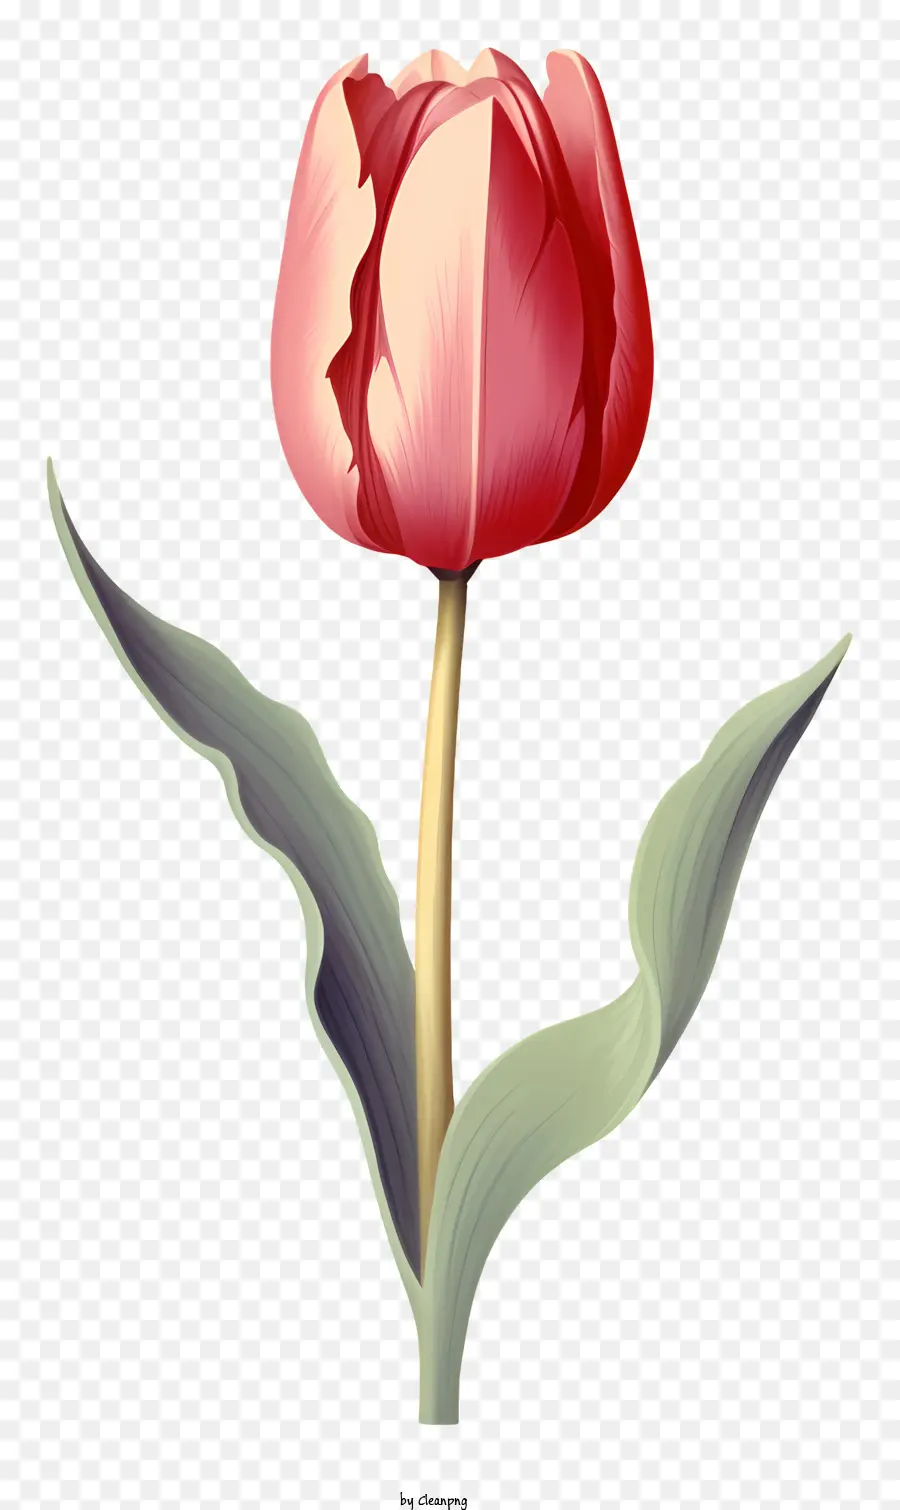 red tulip green stem thin green leaves full bloom petal